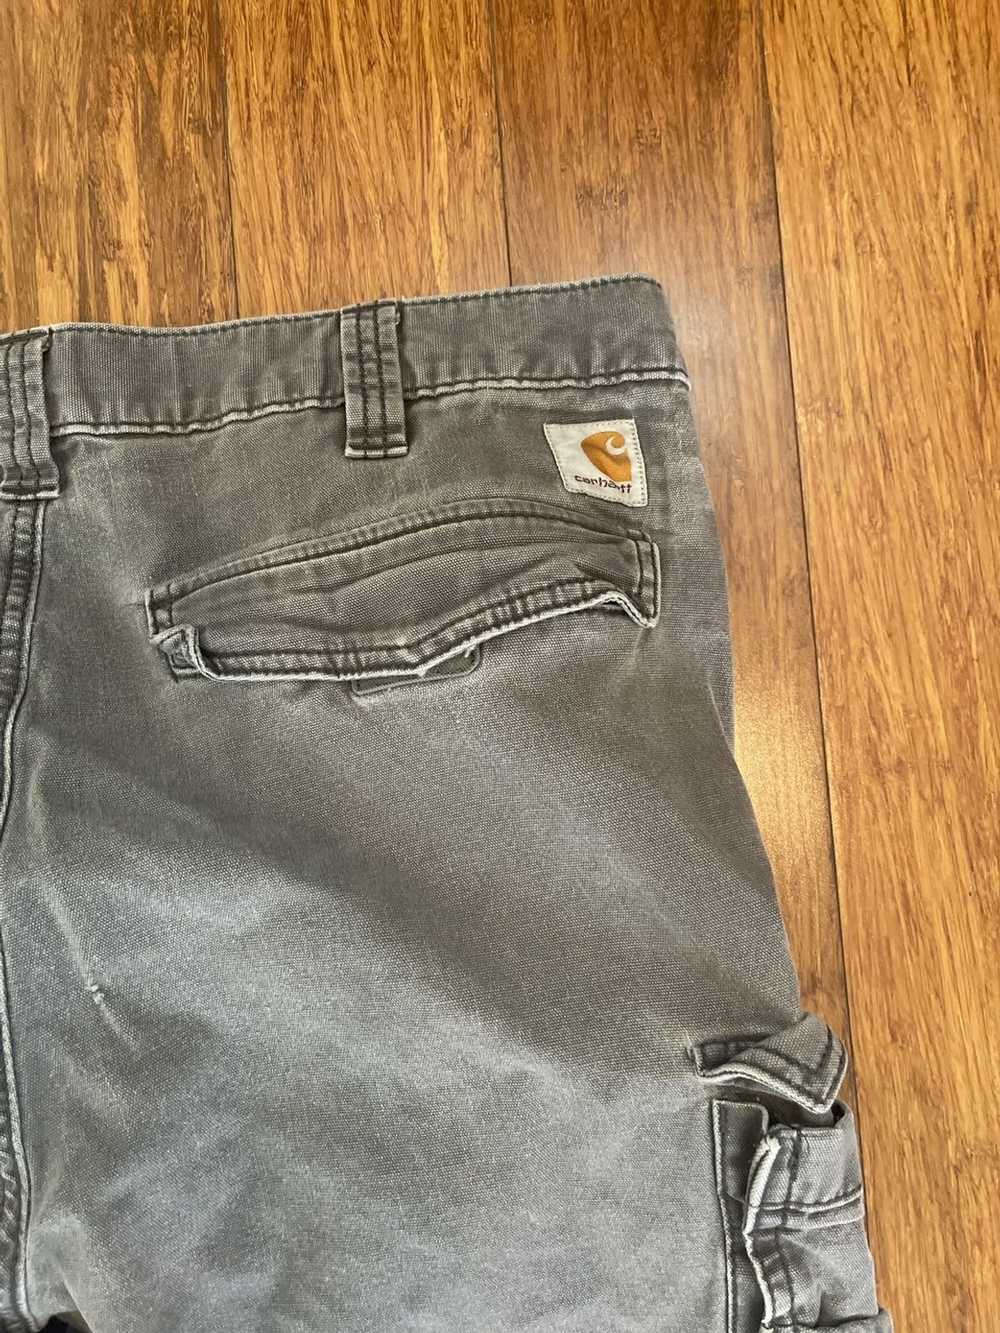 Carhartt Distressed Grey Carhartt Cargo Pants - image 9